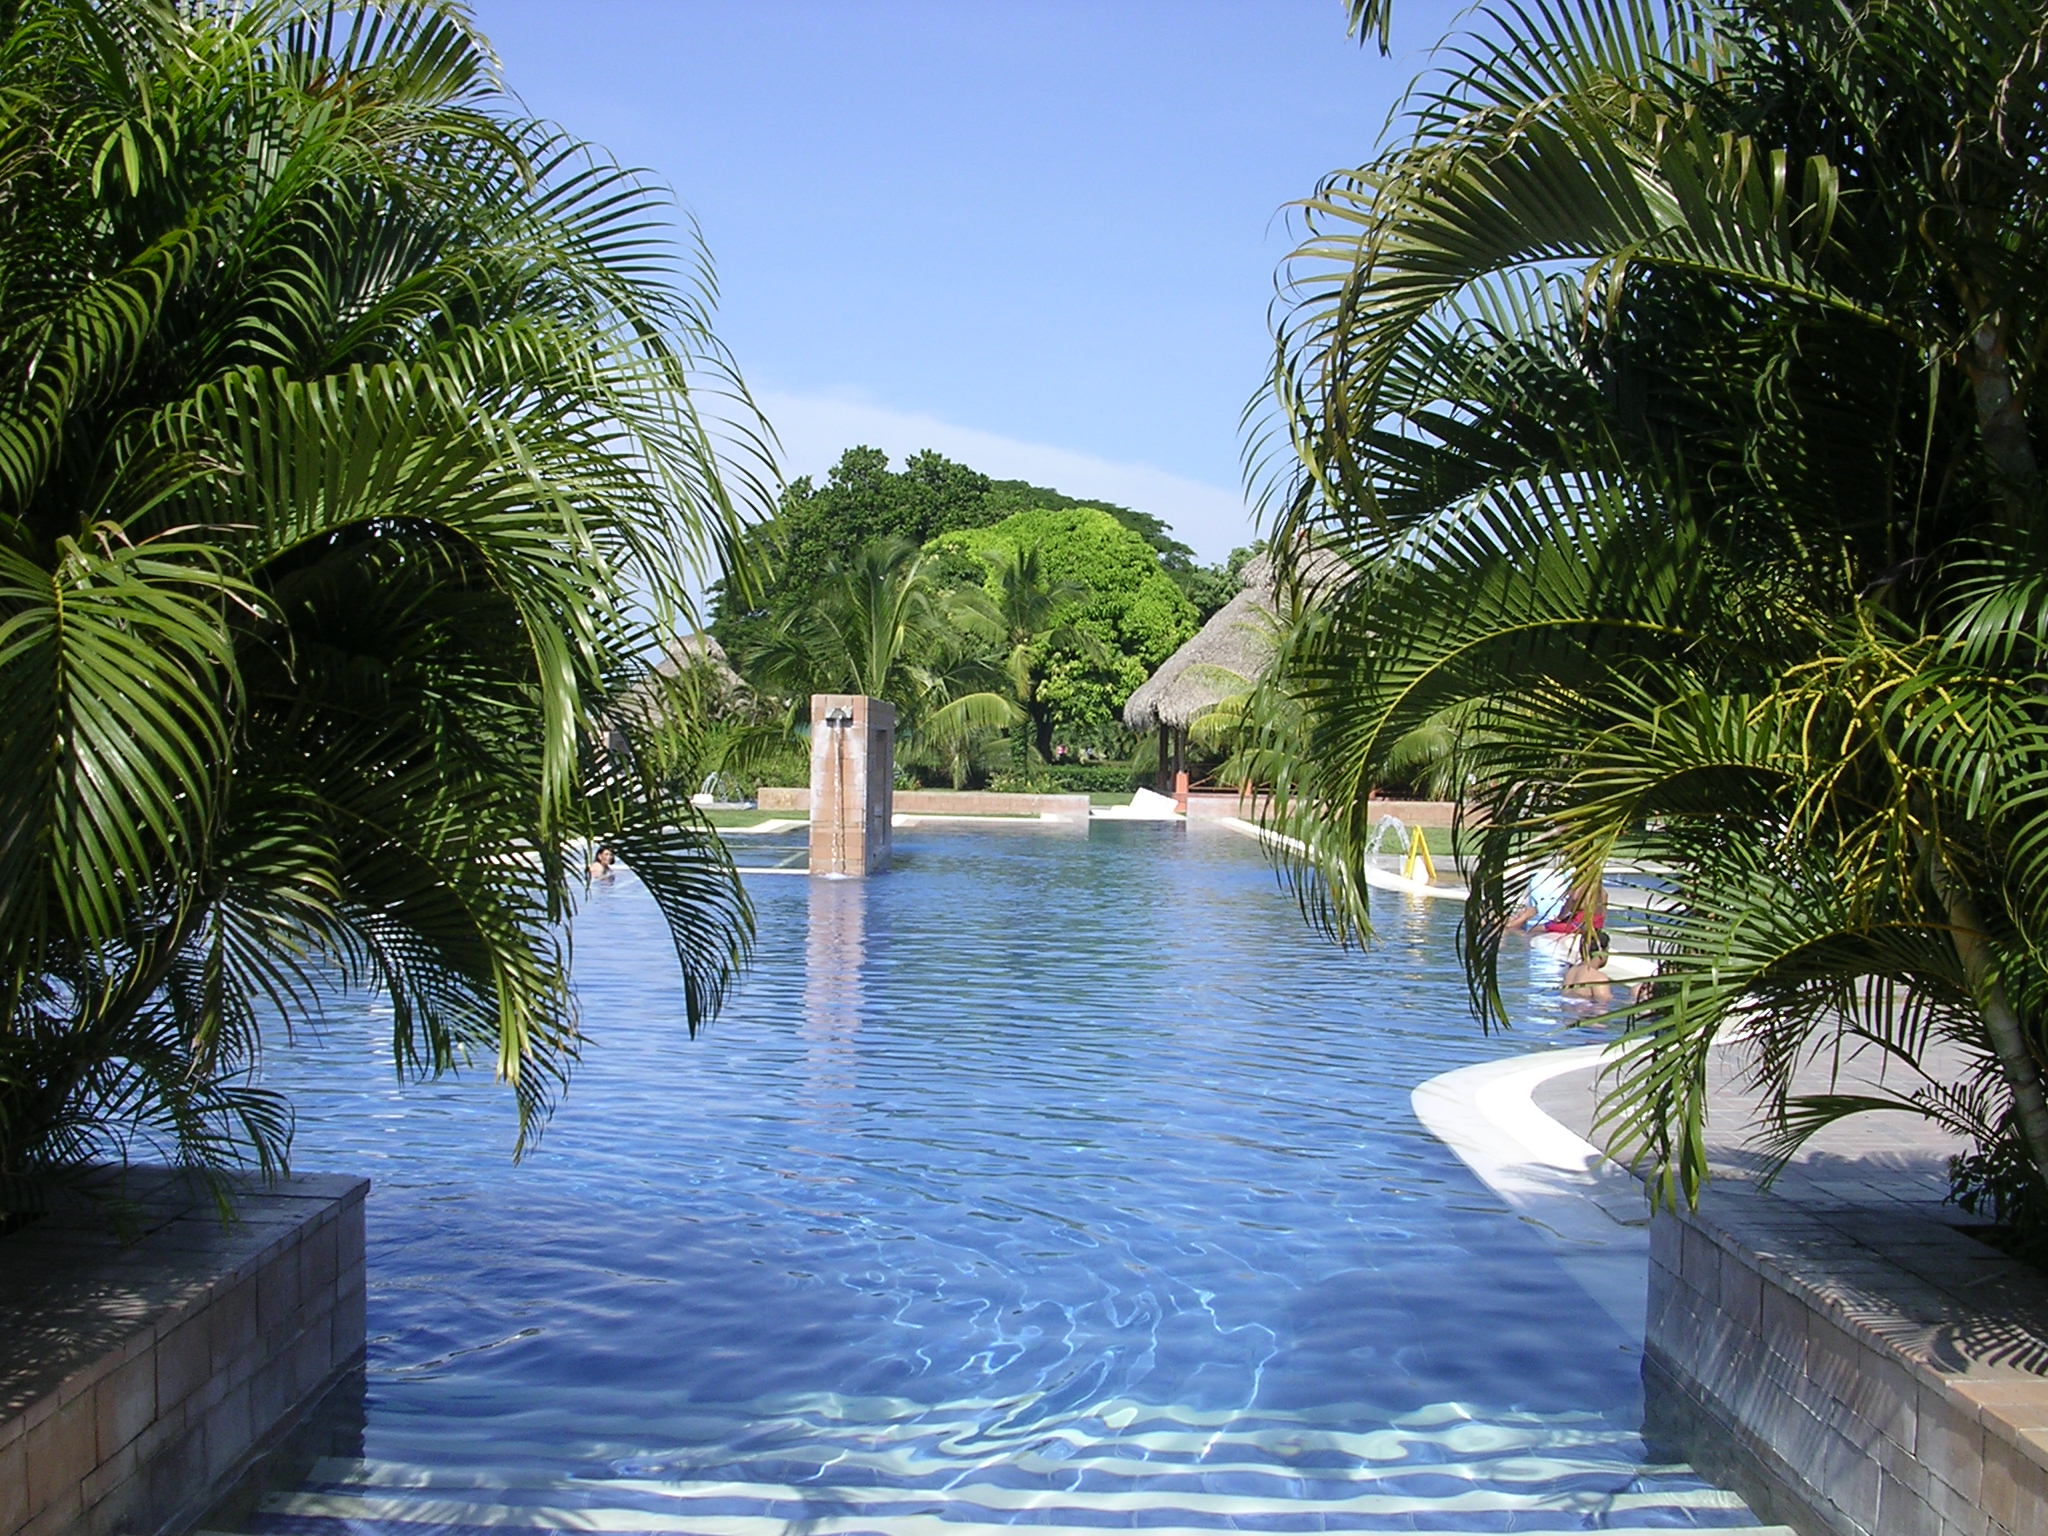 Le Decameron Resort au panama. Photo: Pixabay